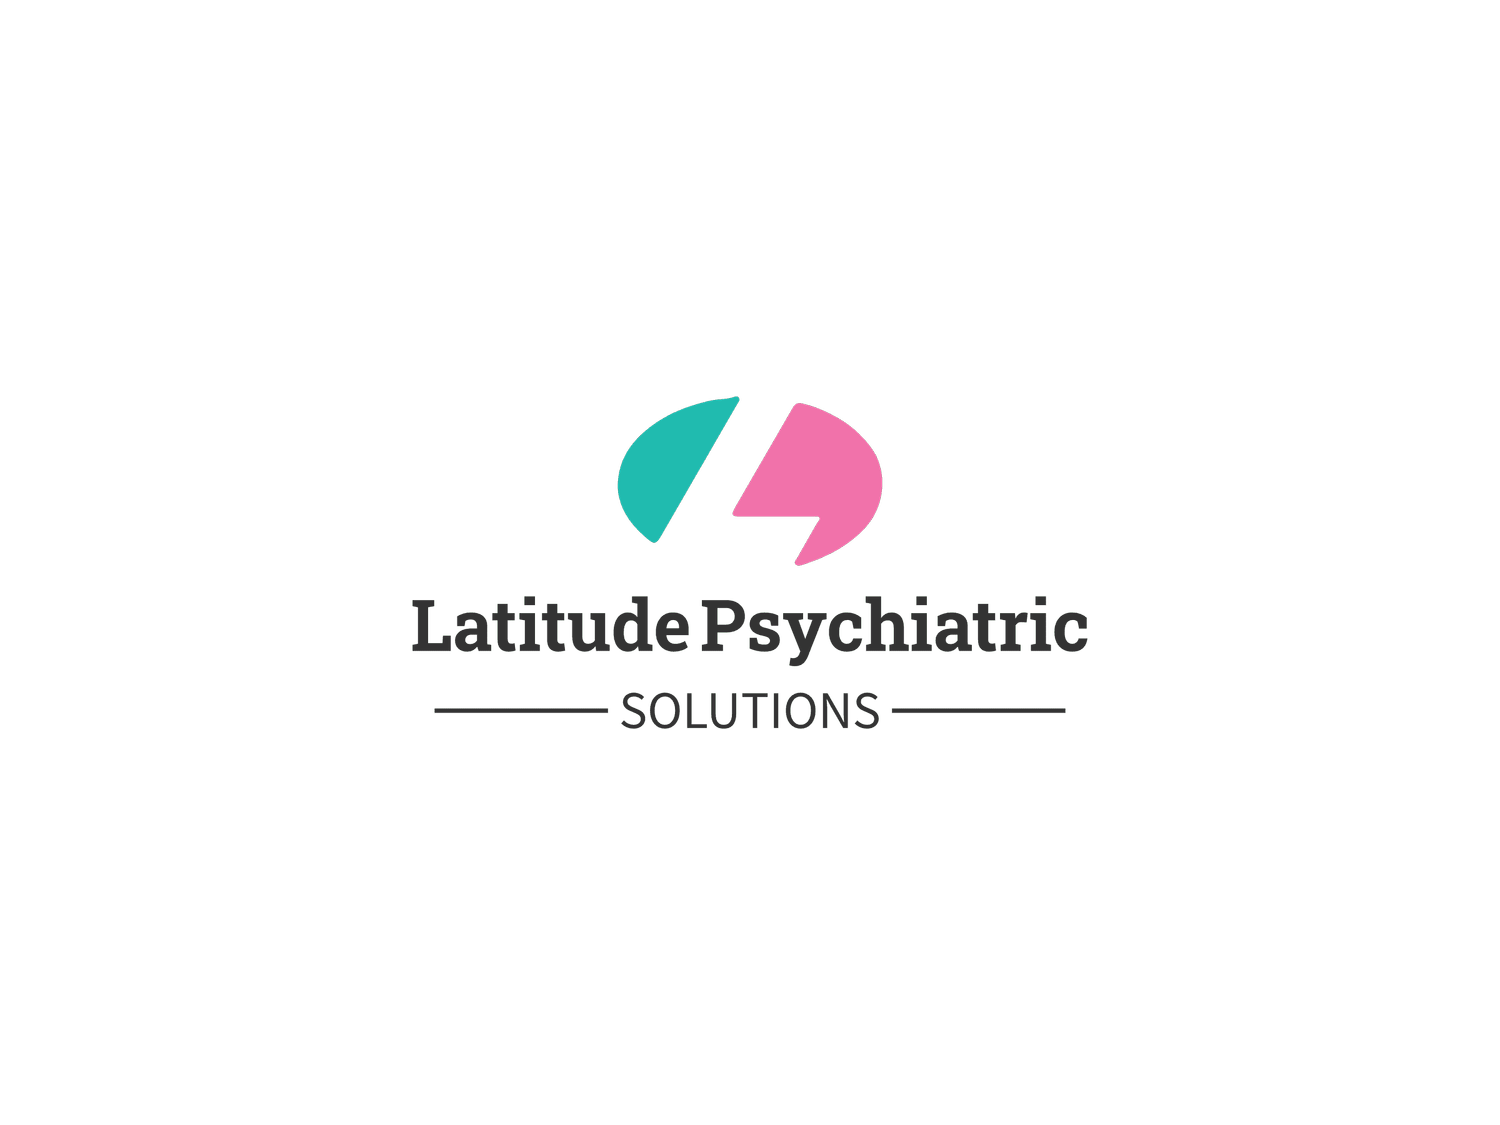 Latitude Psychiatric Solutions